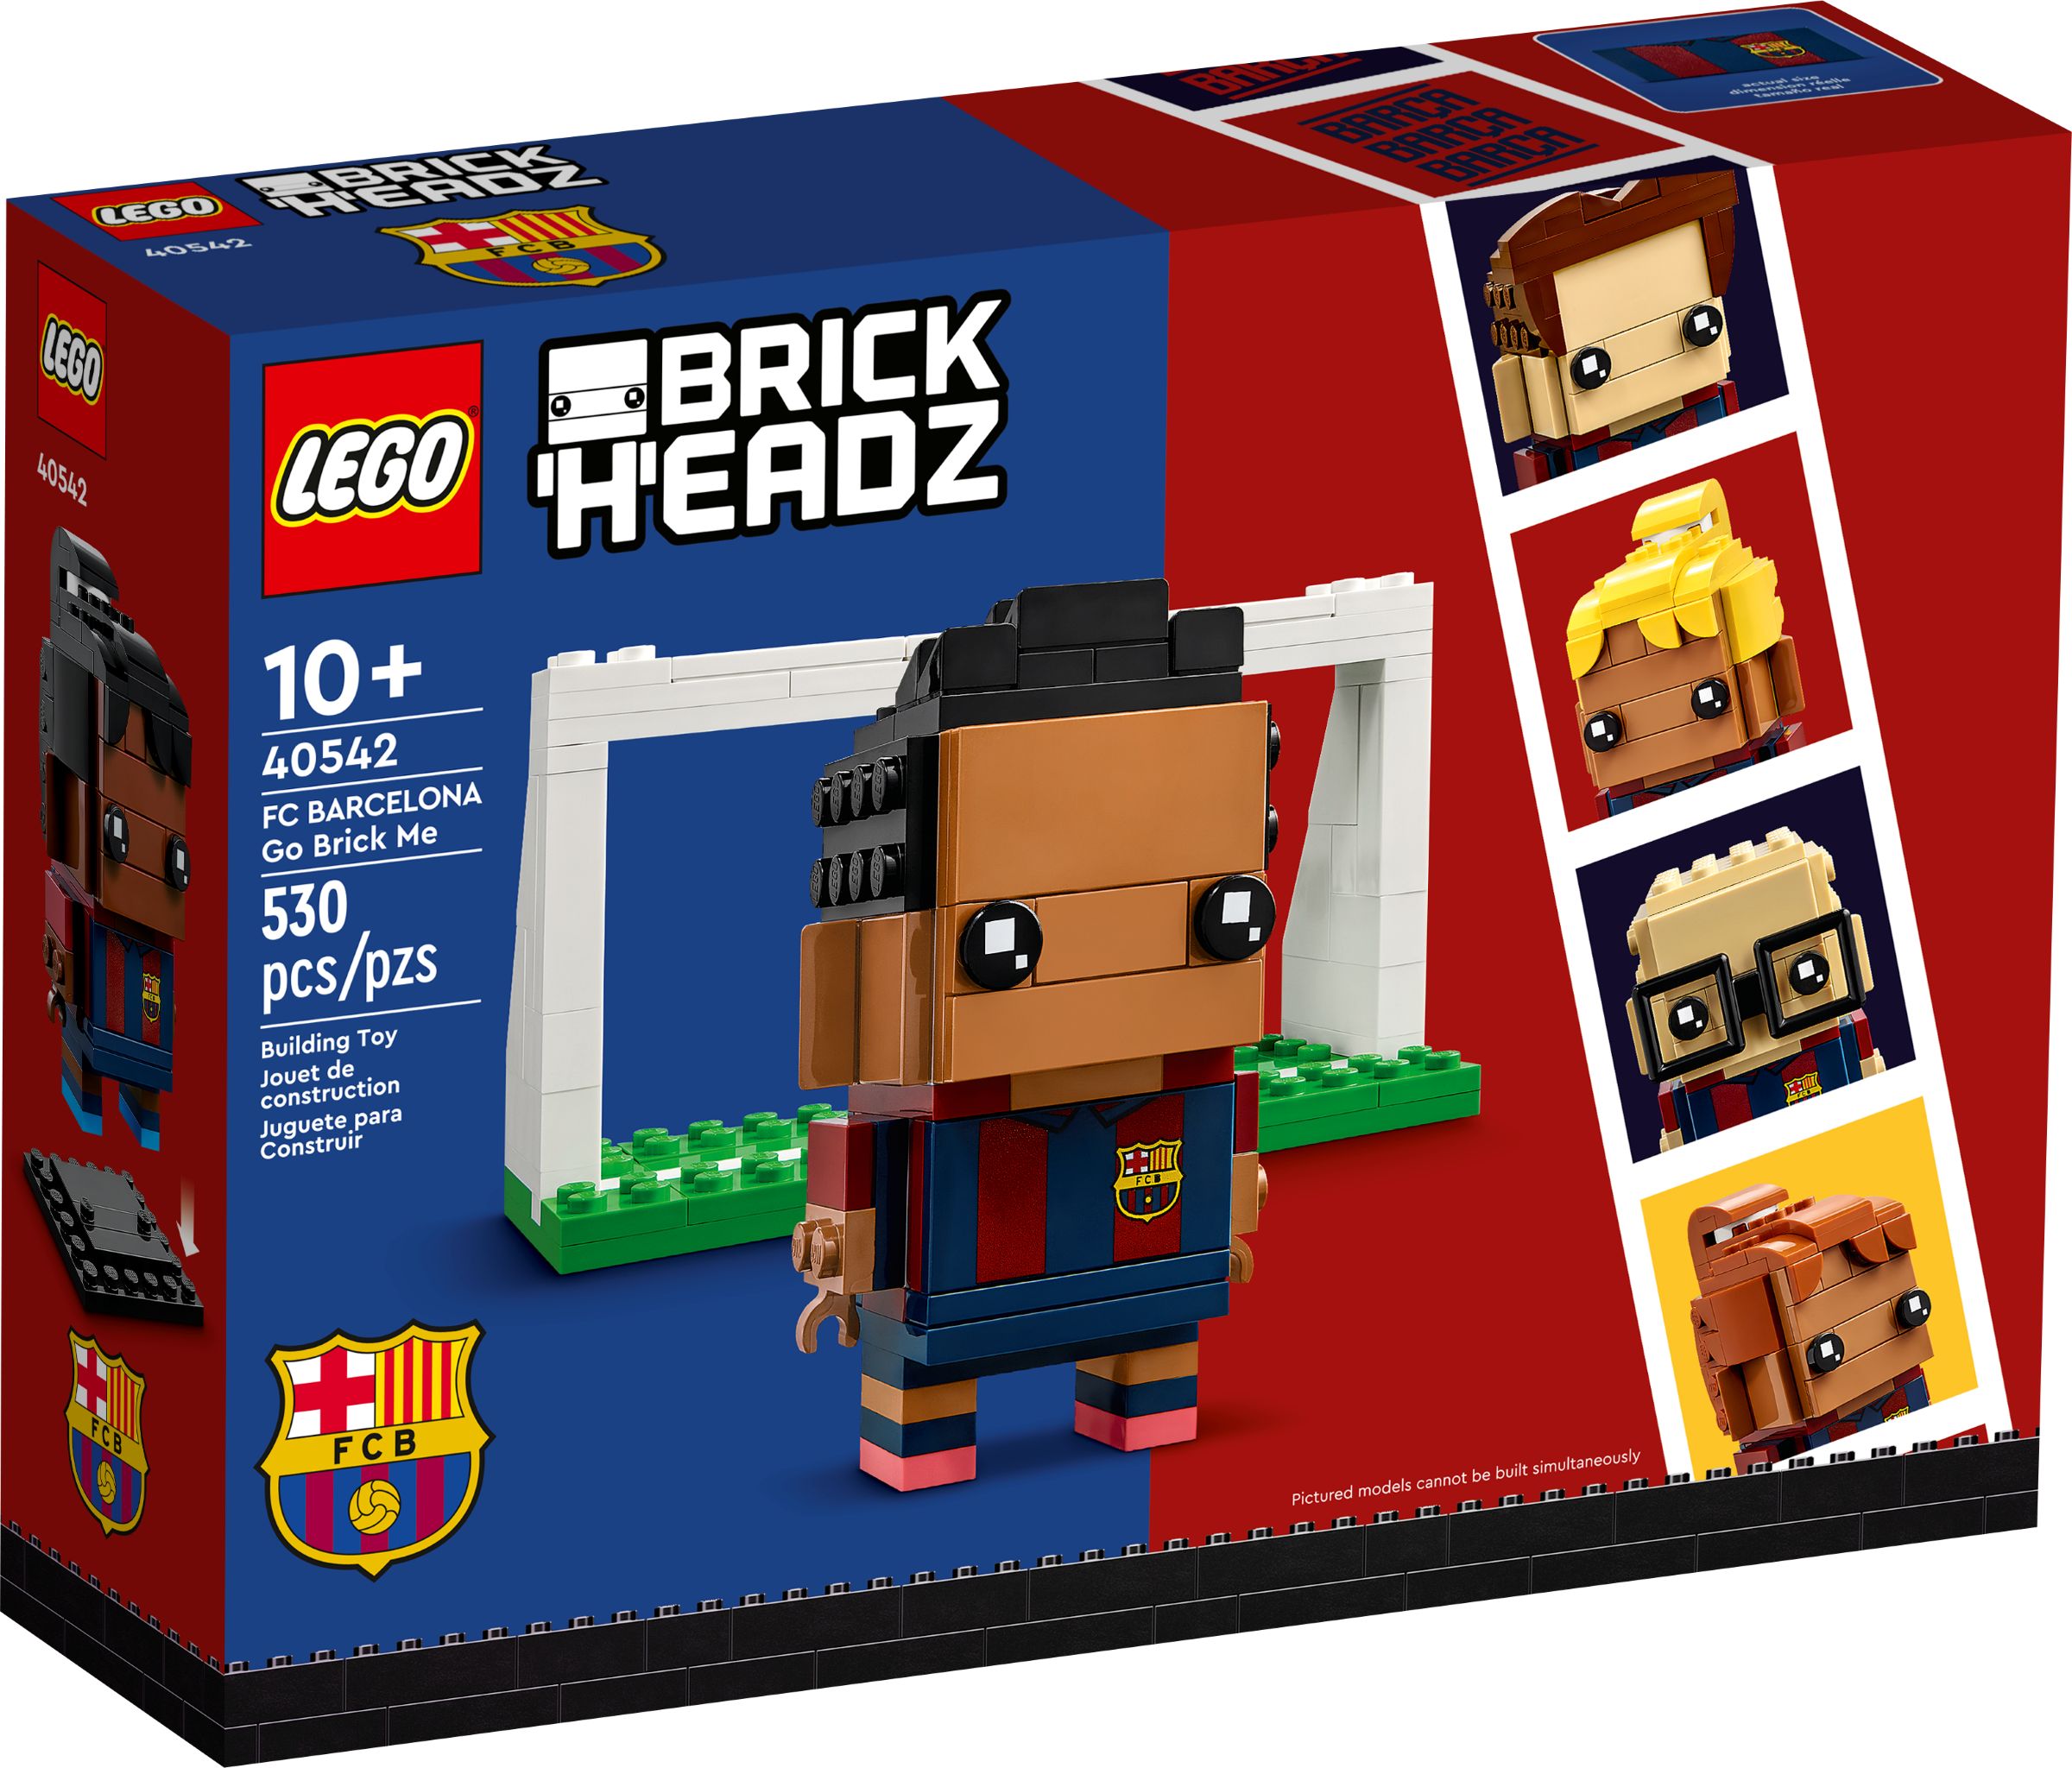 LEGO BrickHeadz 40542 FC Barcelona – Go Brick Me LEGO_40542_alt1.jpg